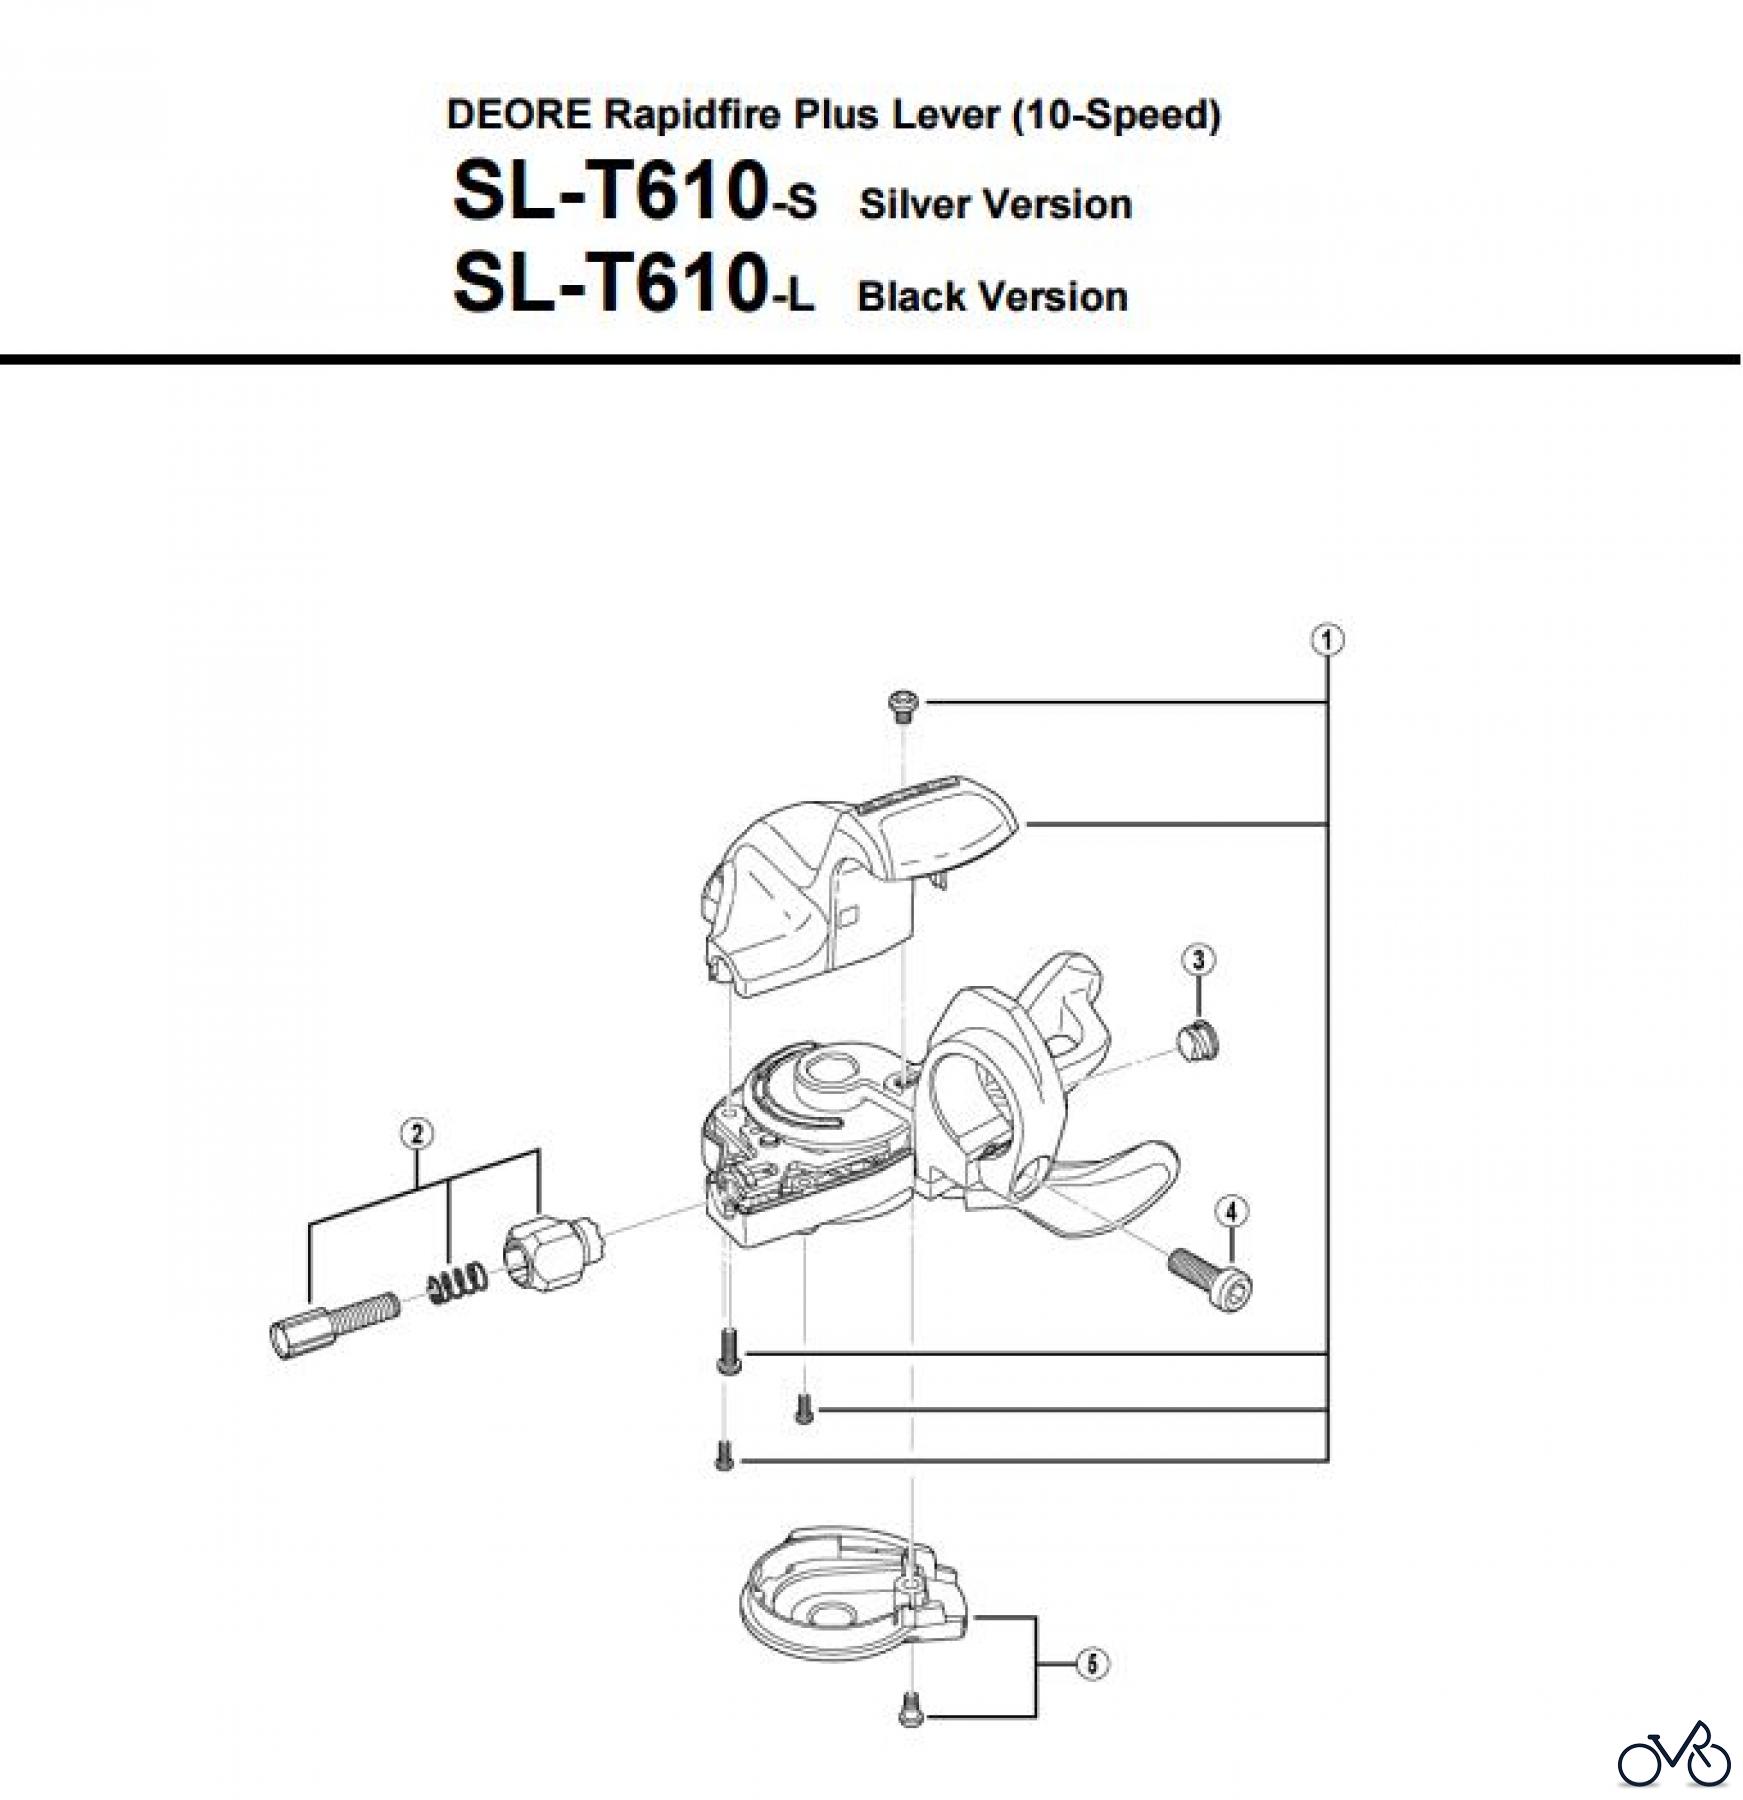  Shimano SL Shift Lever - Schalthebel SL-T610 -3524 DEORE Rapidfire Plus Lever (10-Speed)